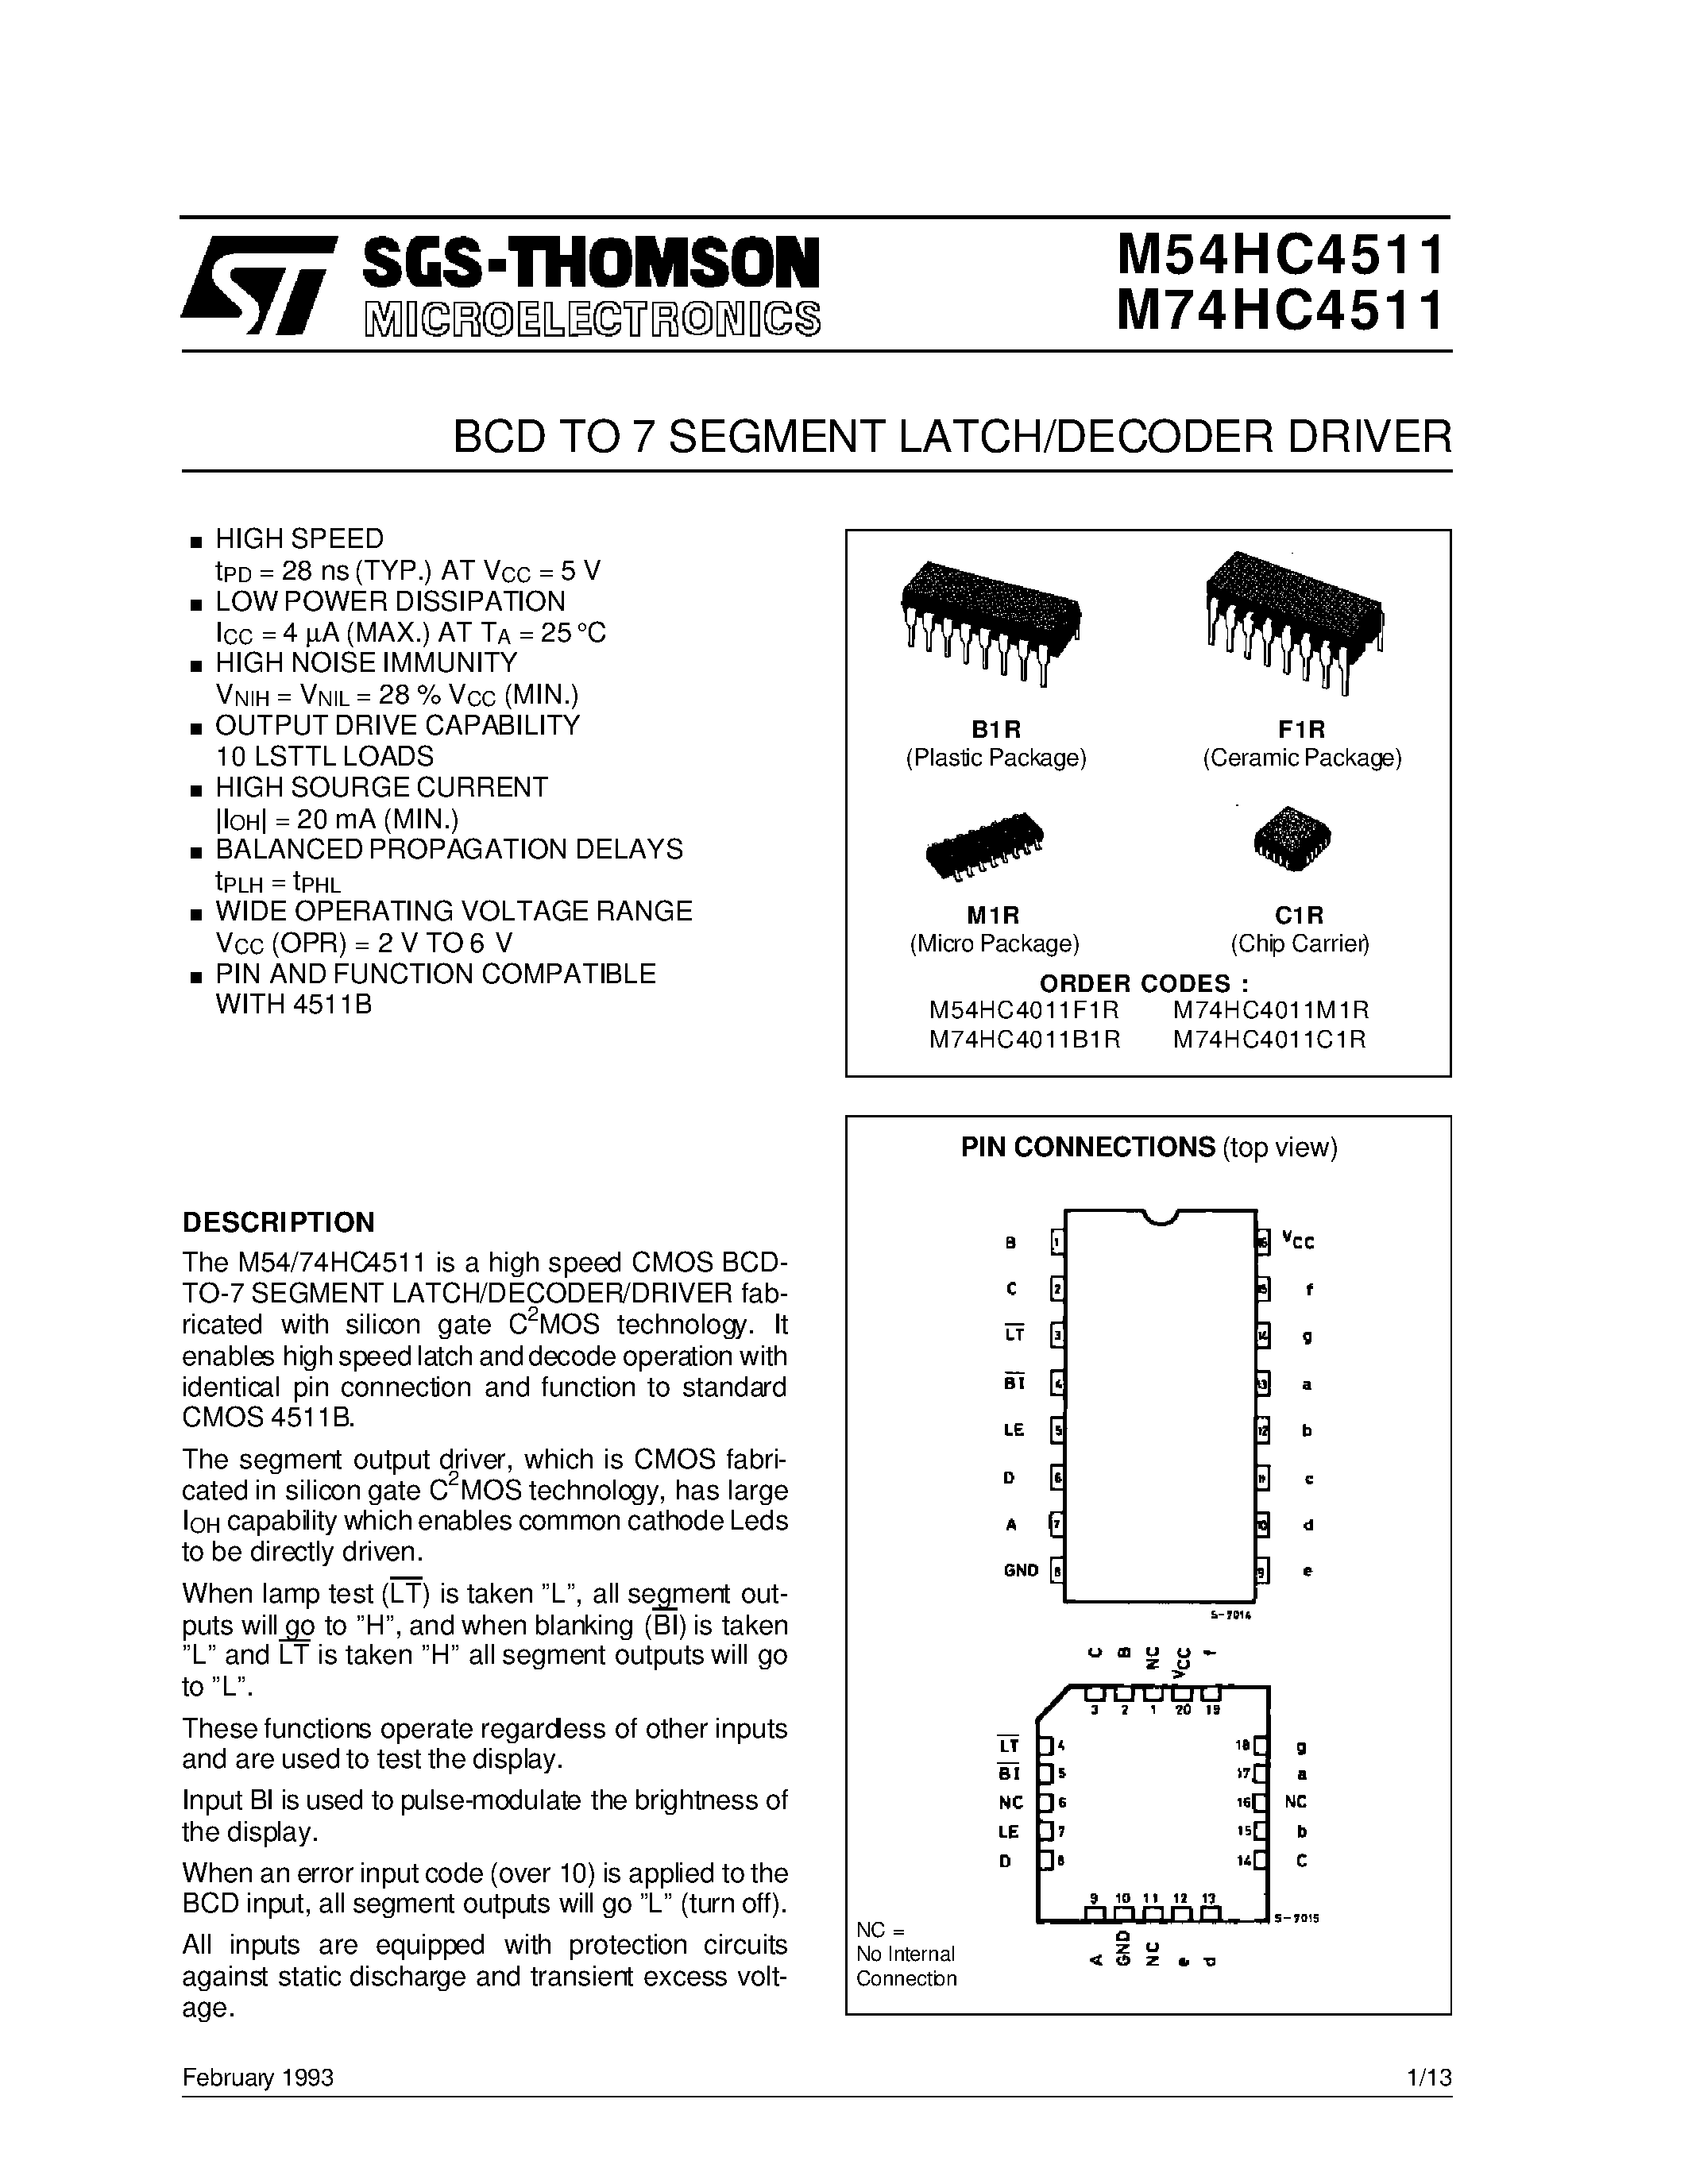 Datasheet M74HC4011C1R - BCD TO 7 SEGMENT LATCH/DECODER DRIVER page 1